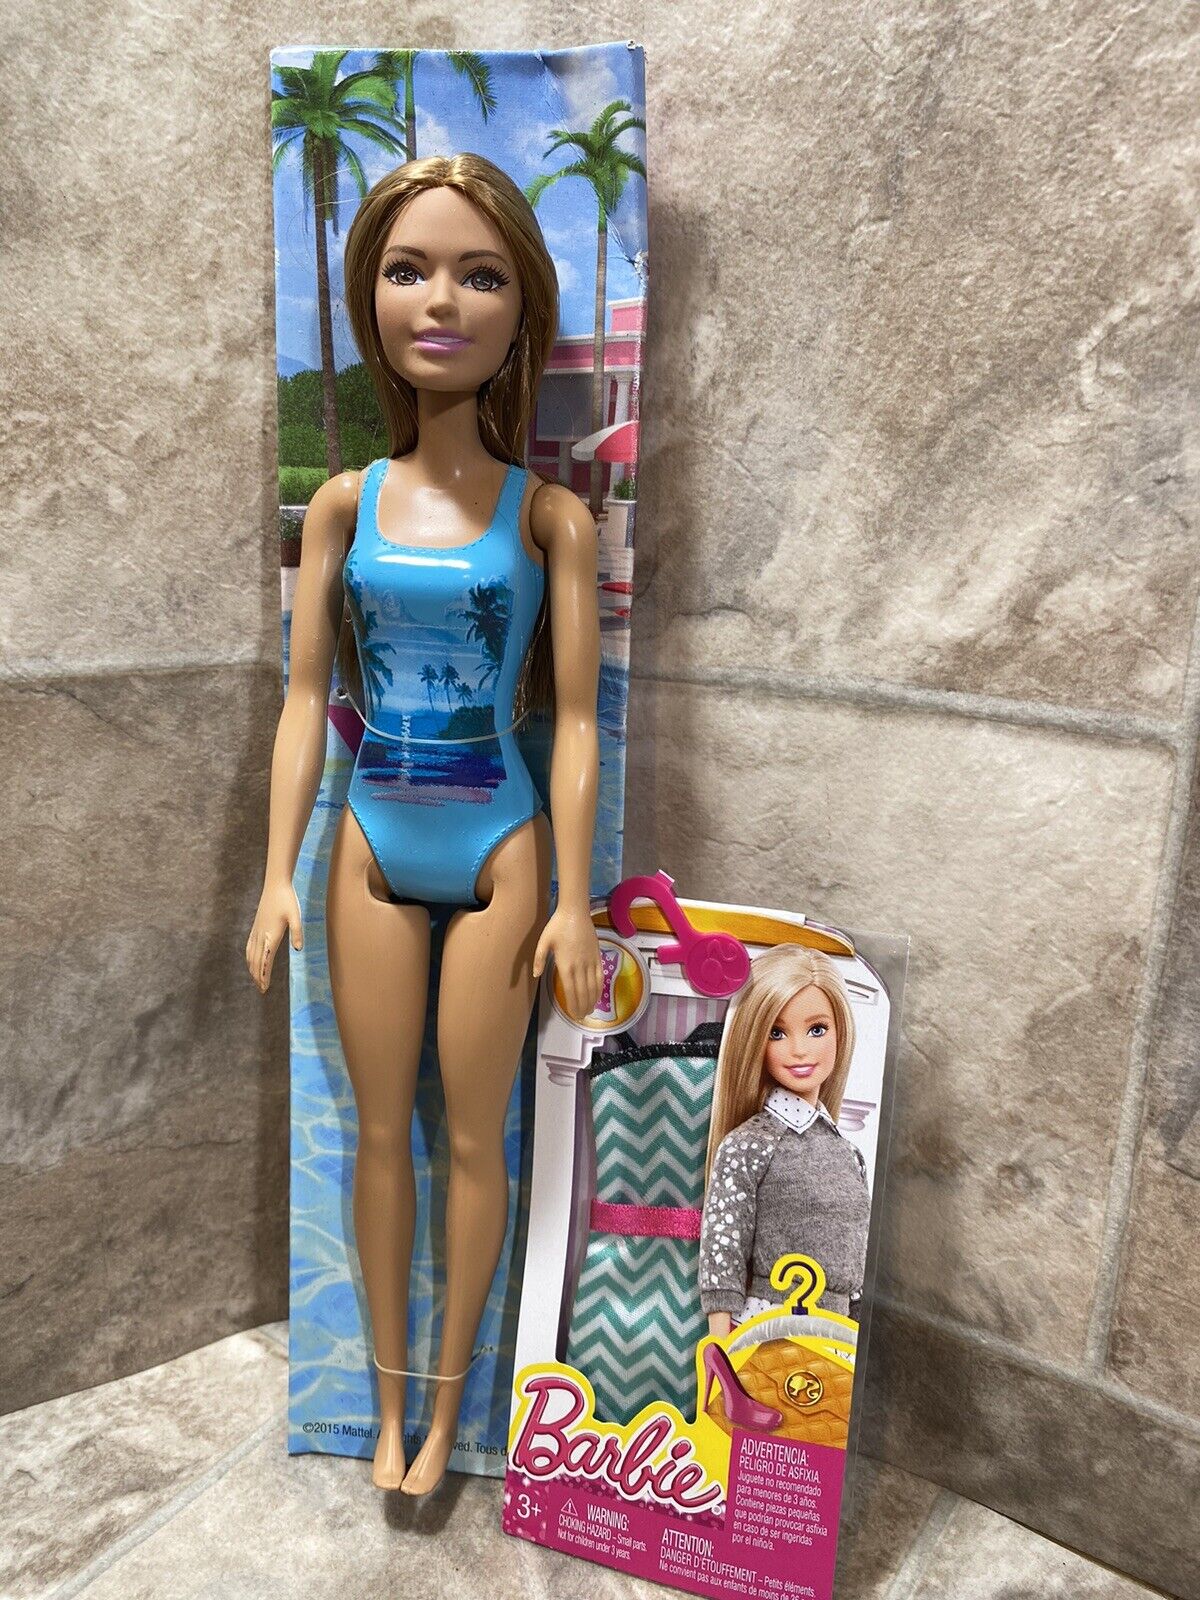 Barbie 2015 Mattel Blue Vacation Swimsuit Plus New Teal Chevron Dress